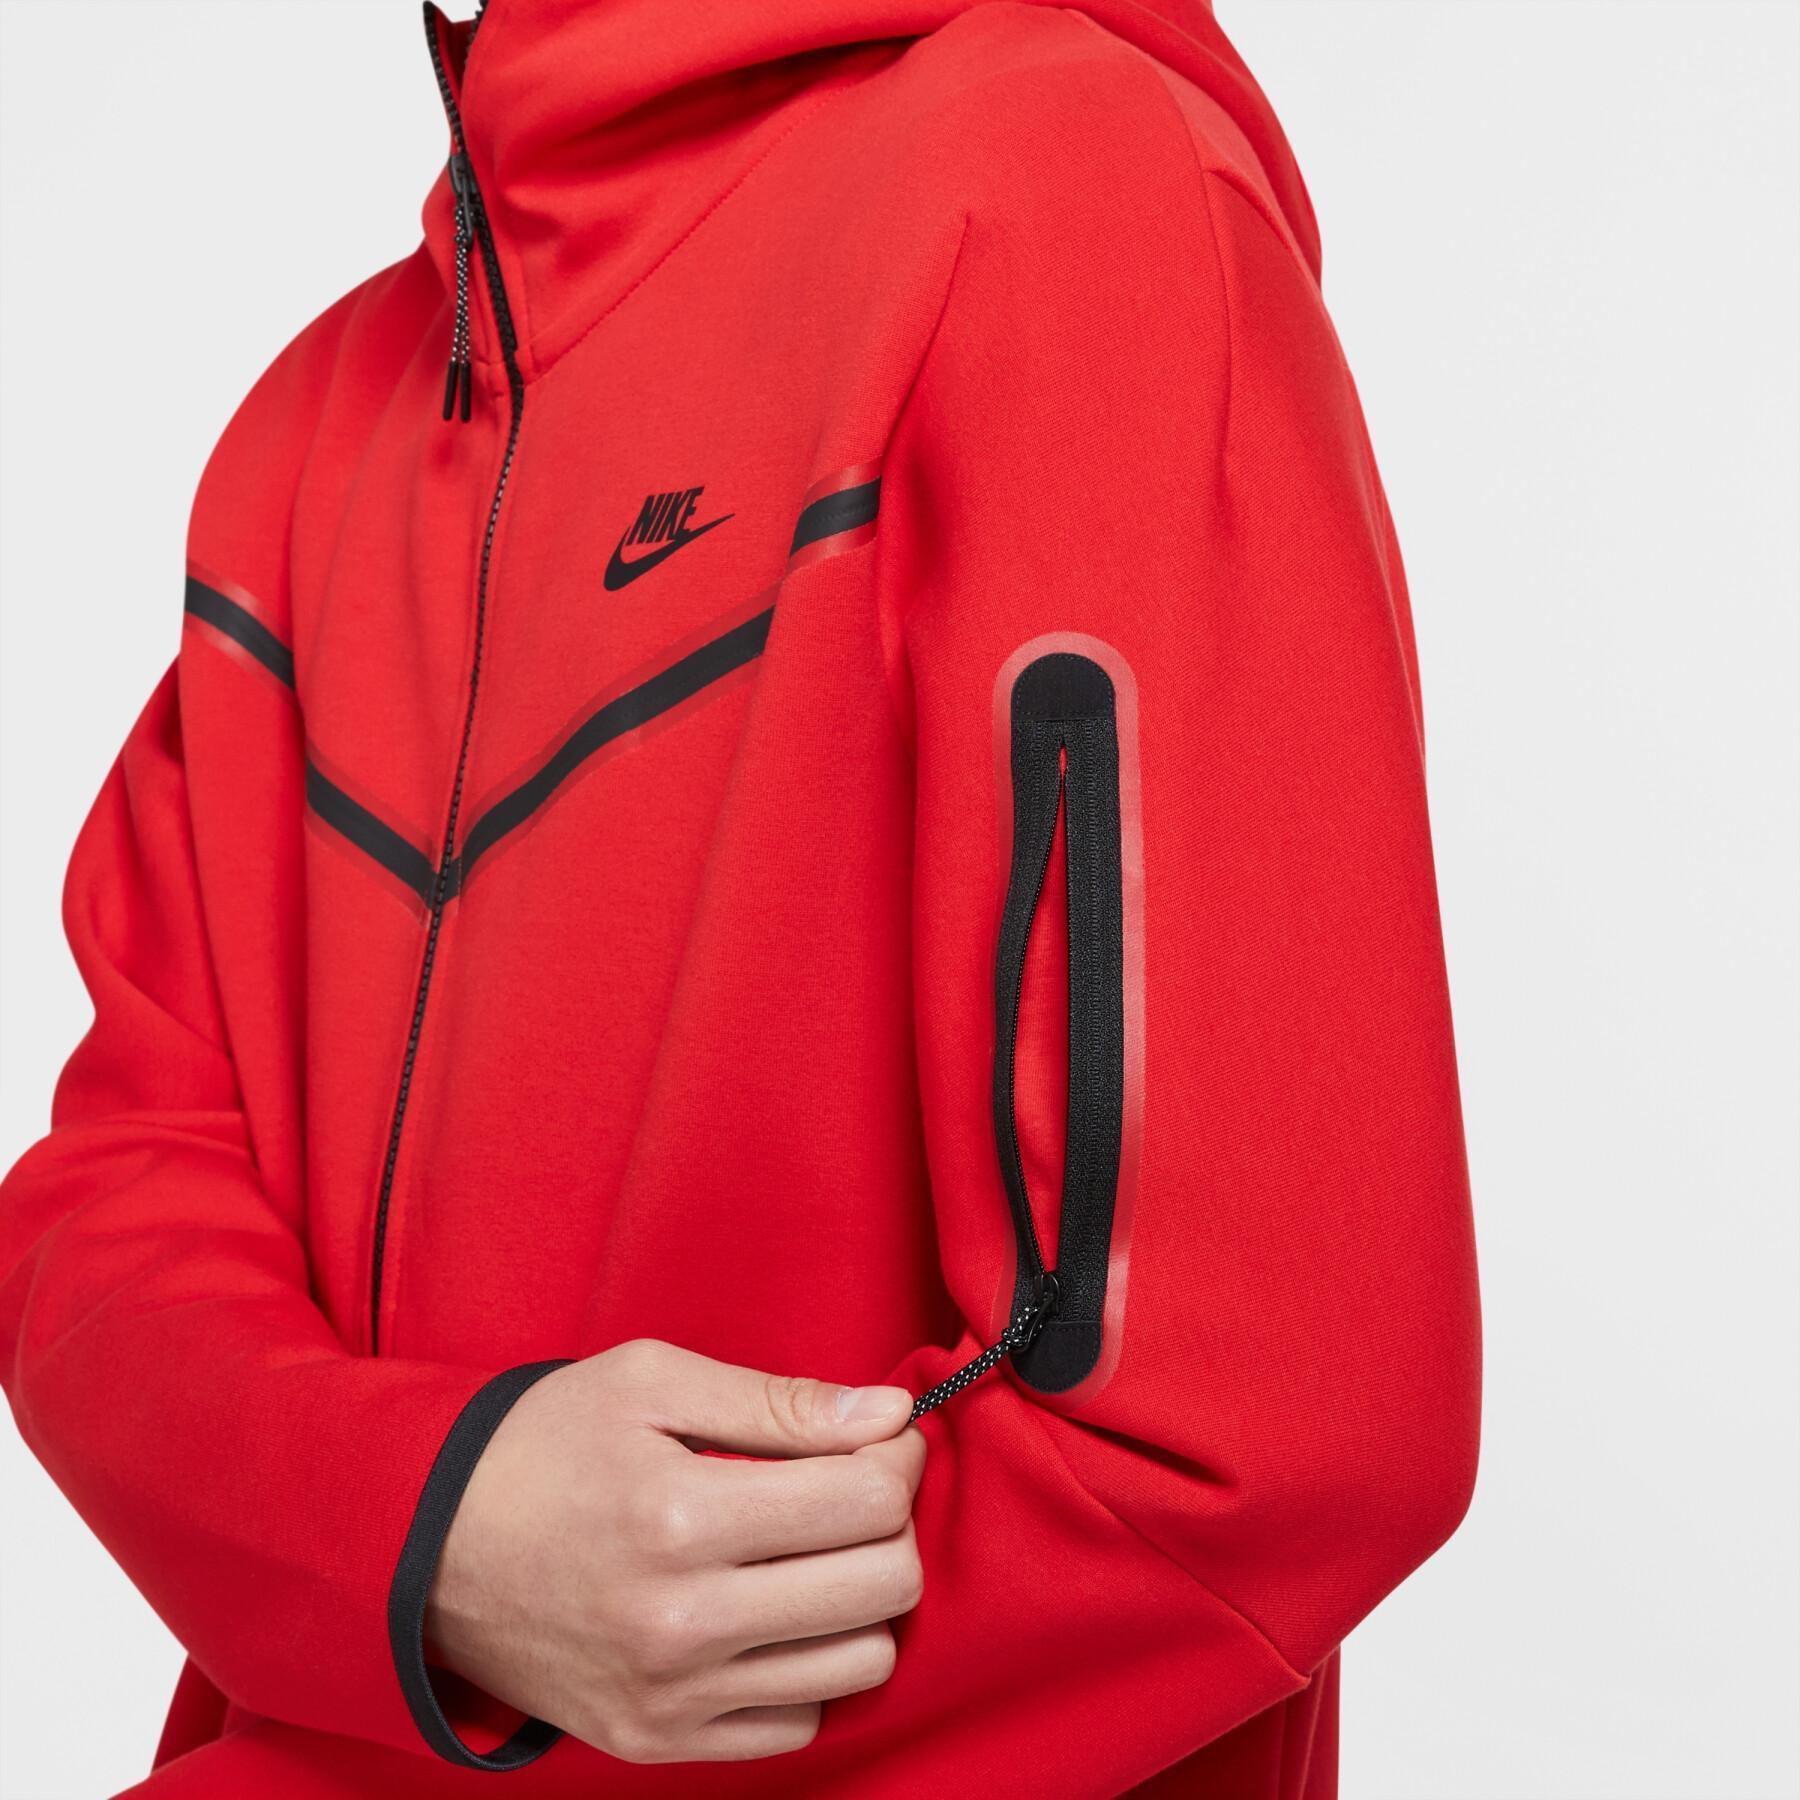 Bluza z kapturem Nike Sportswear Tech Fleece